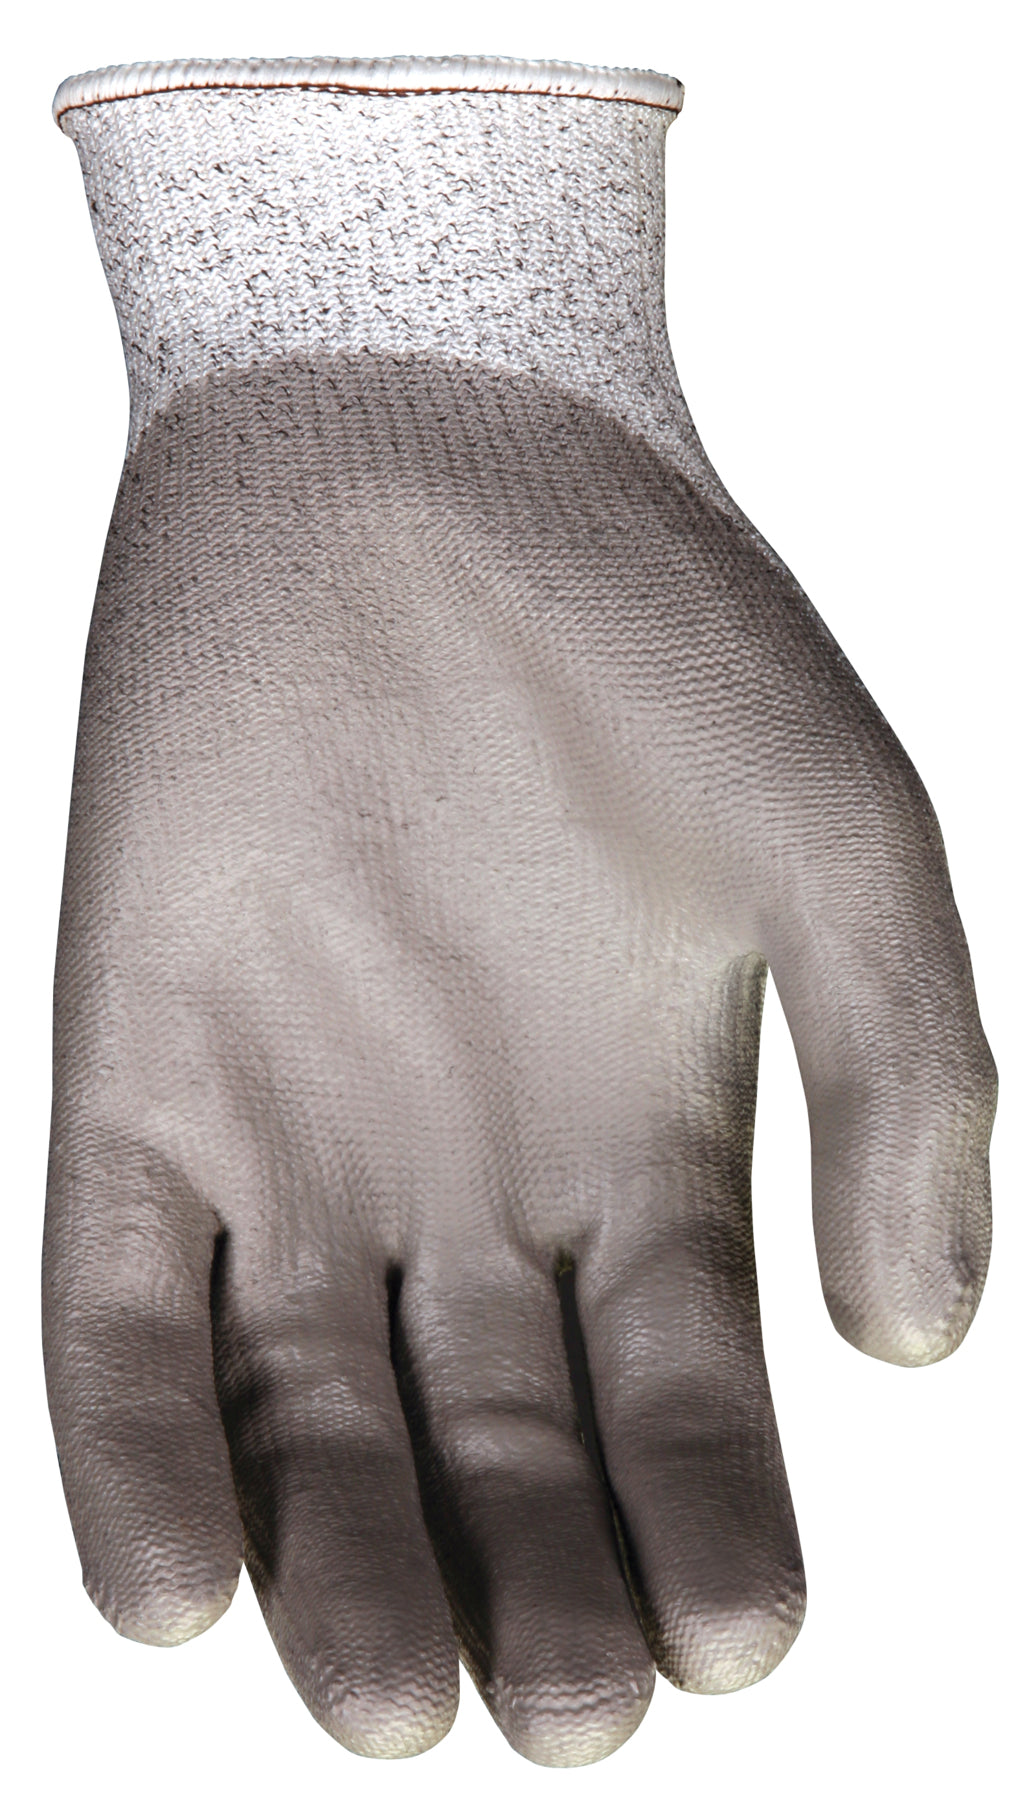 9672 - Cut Pro® Dyneema® Work Gloves